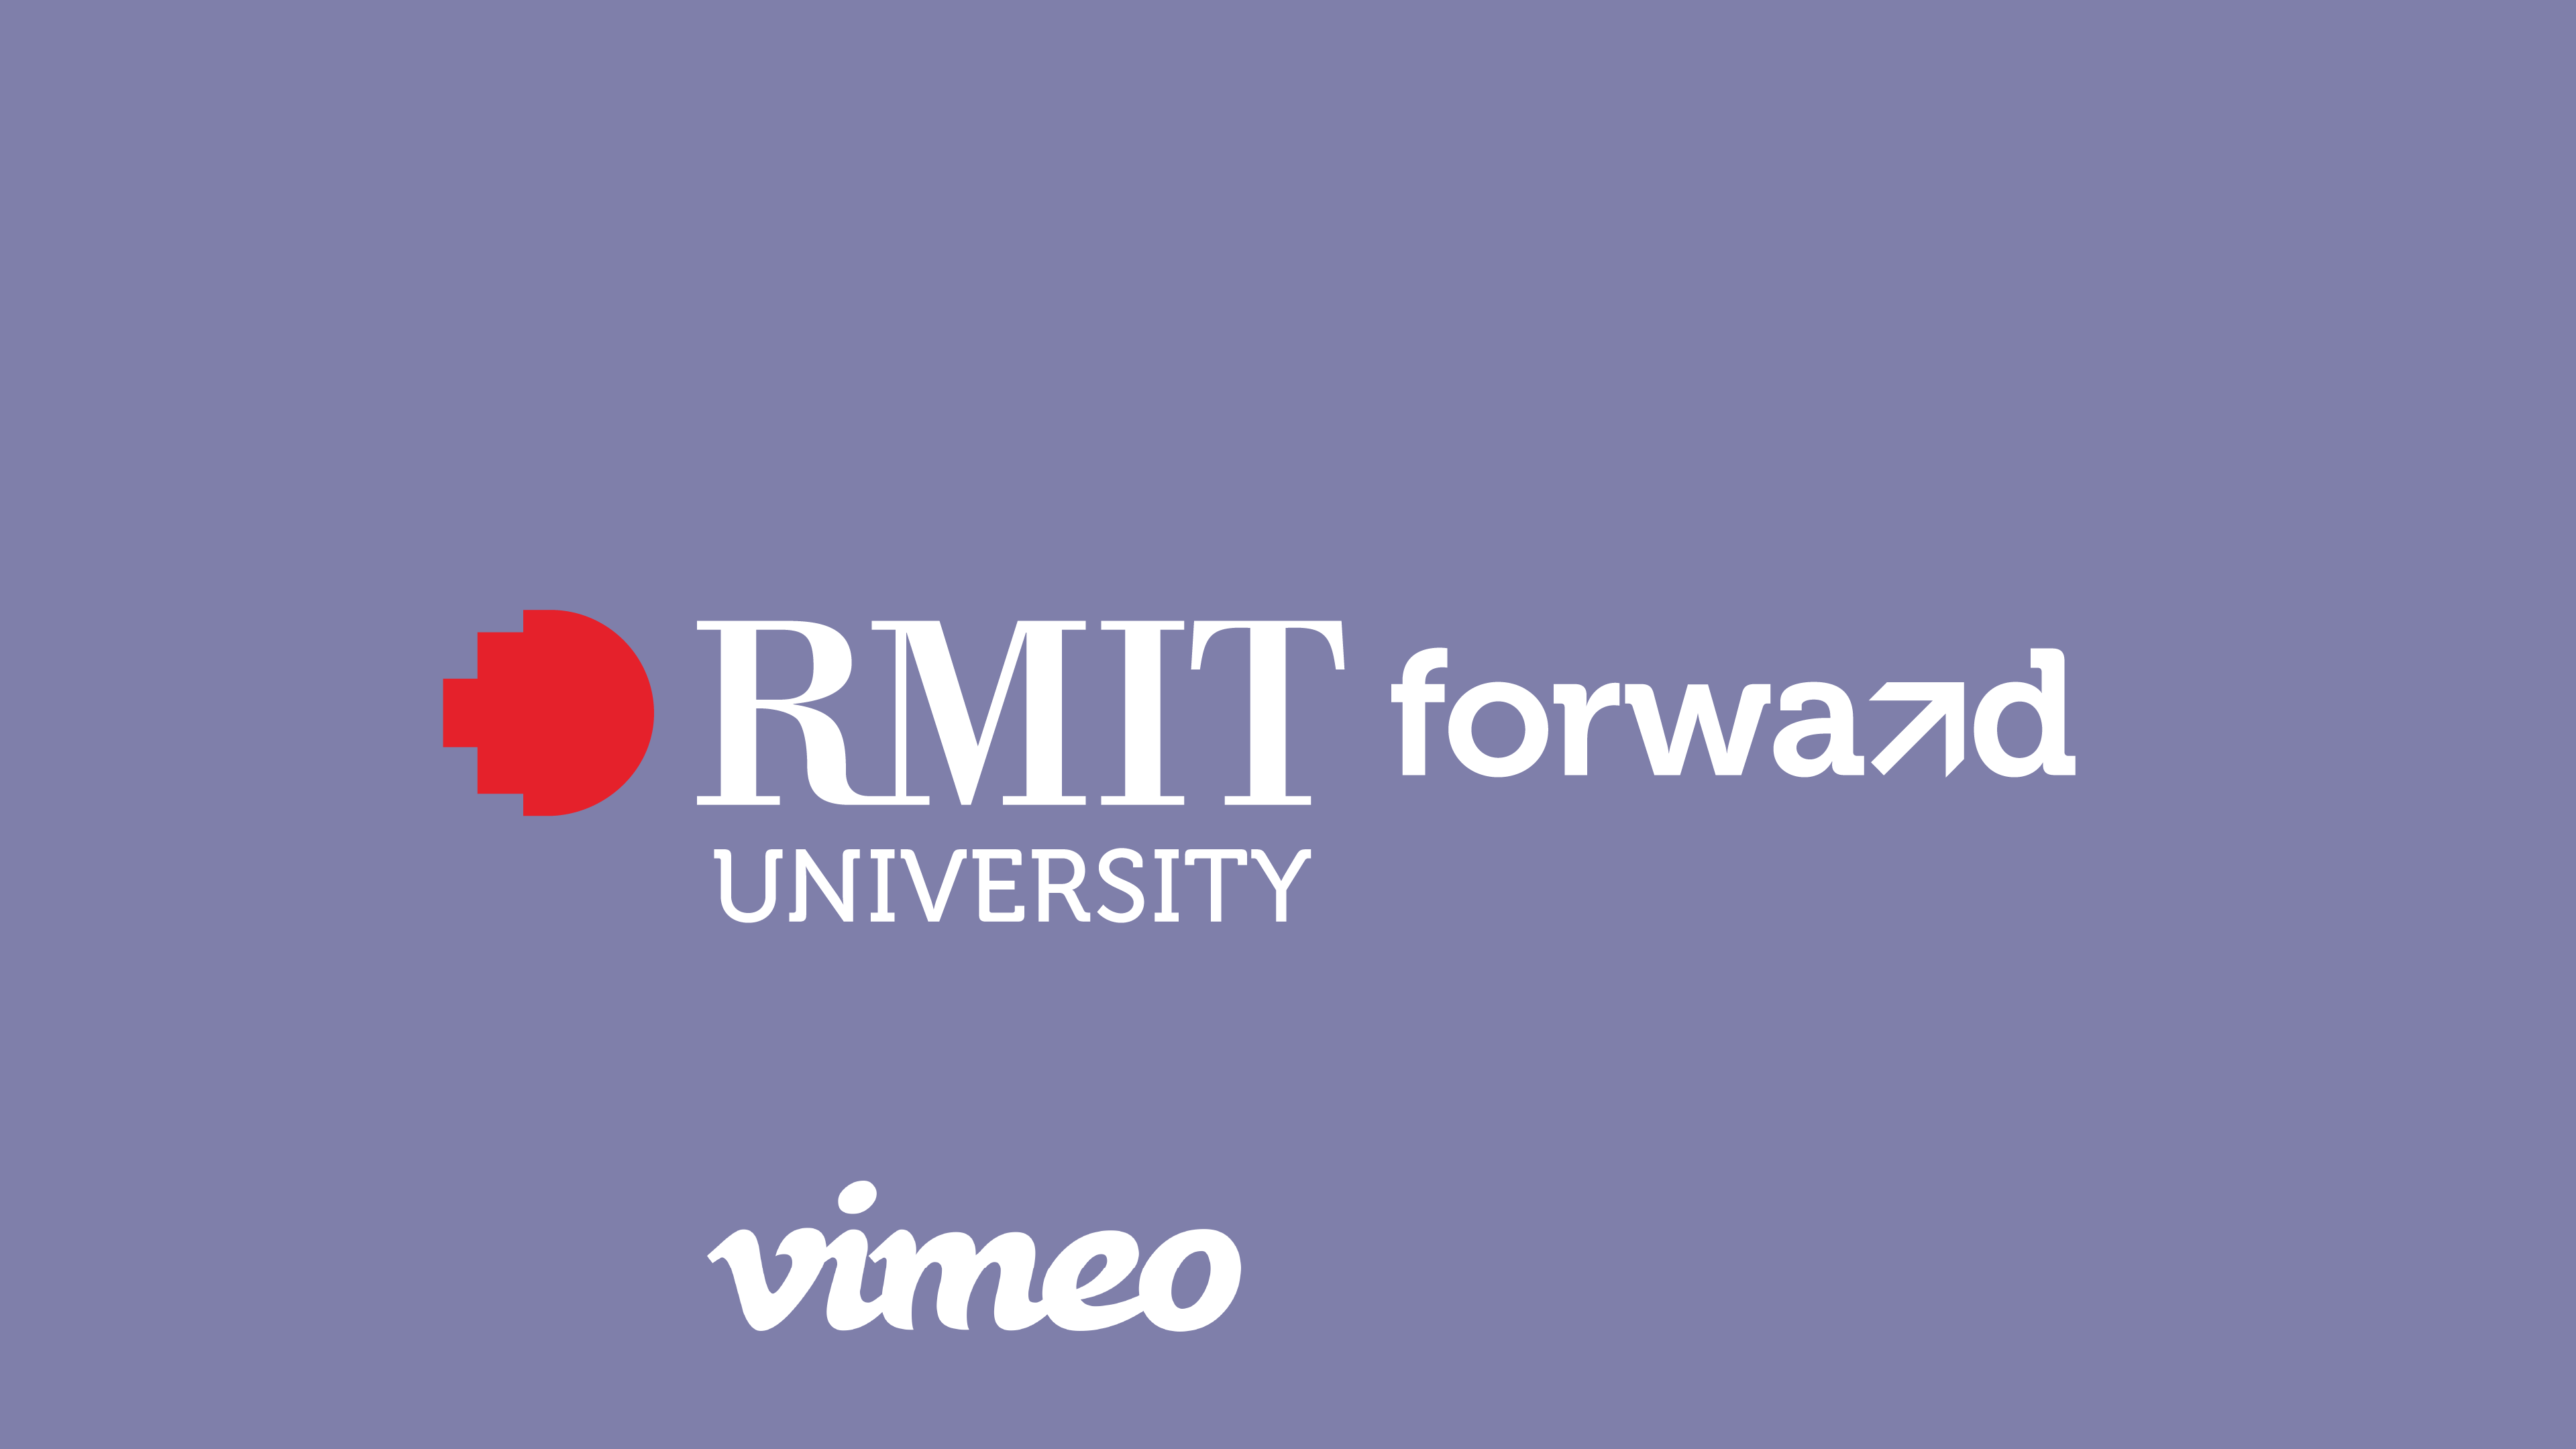 RMIT University Forward vimeo logo